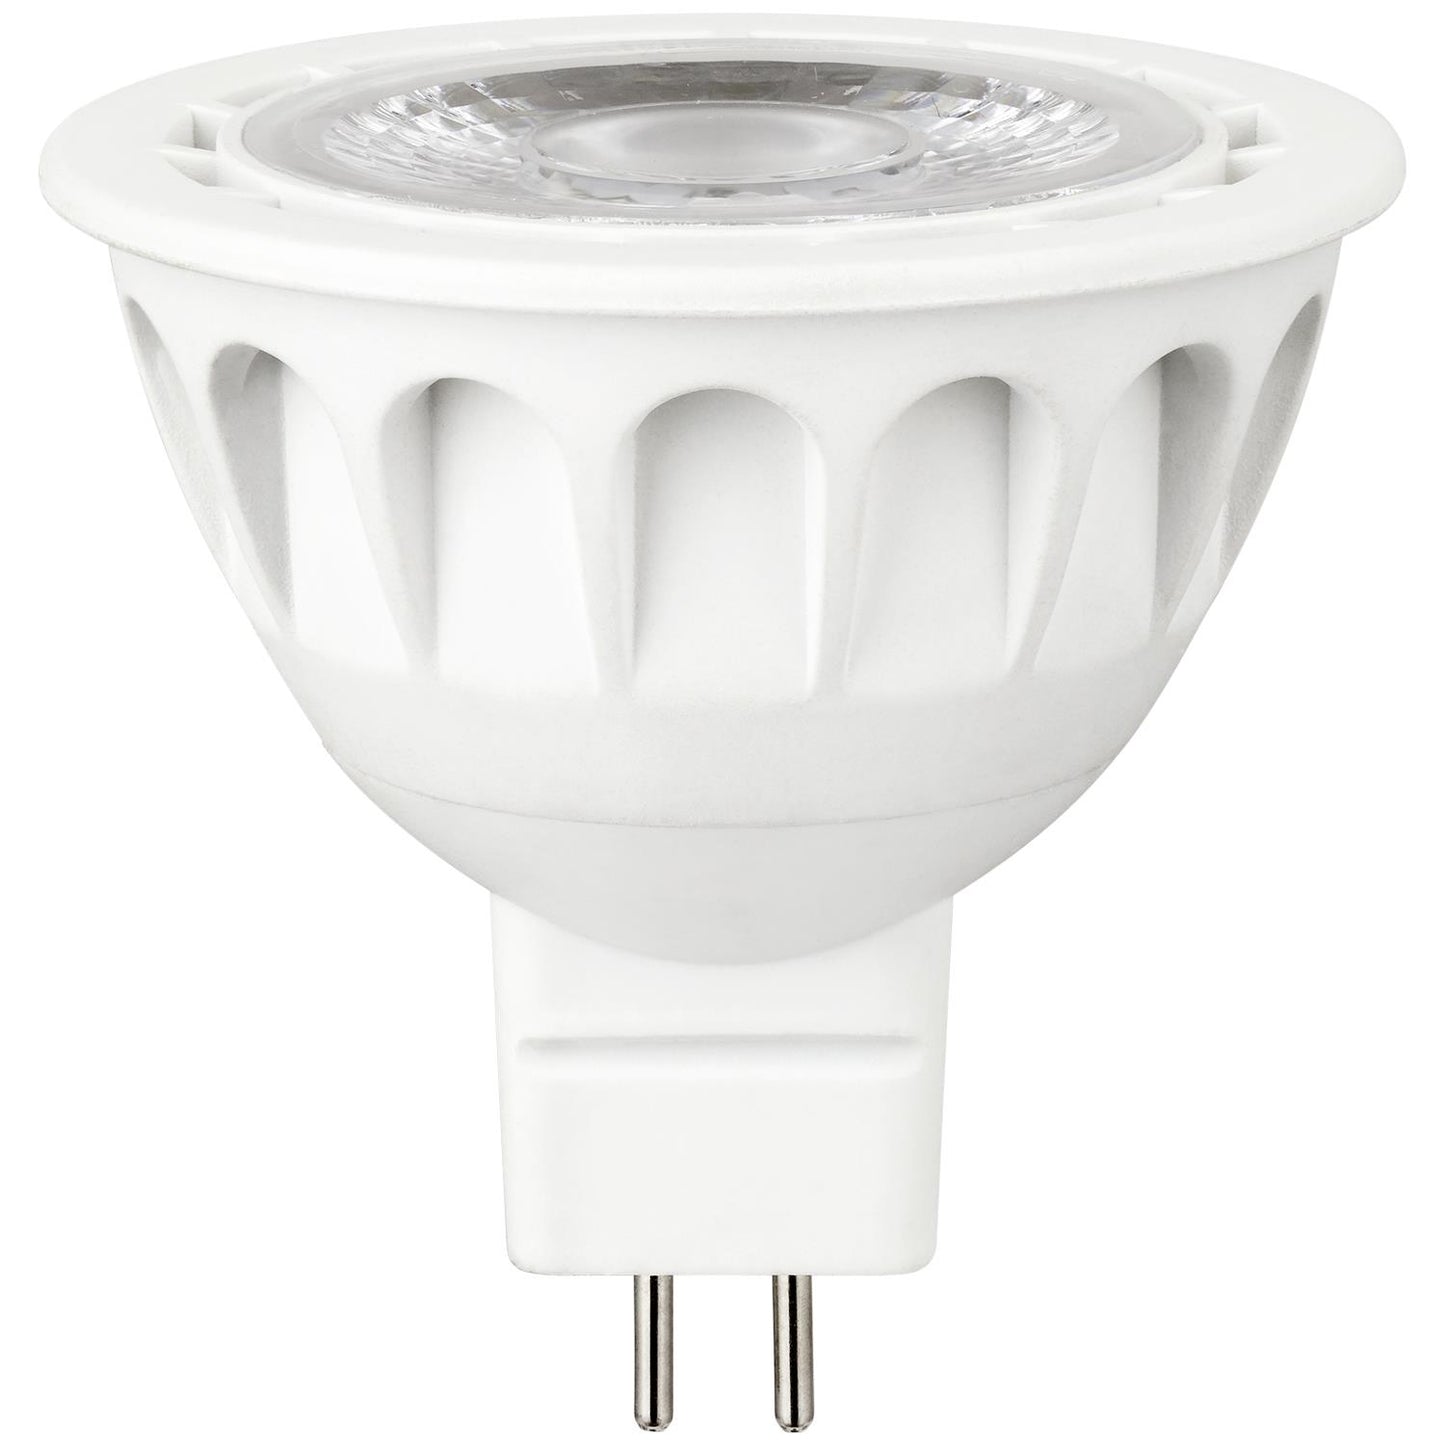 Sunlite 81094-SU LED MR16 Mini Reflector Light Bulb, 12 Volt, 7 Watts (50W Equivalent), GU5.3 Base, Dimmable, UL Listed, 27K - Warm White 1 Pack